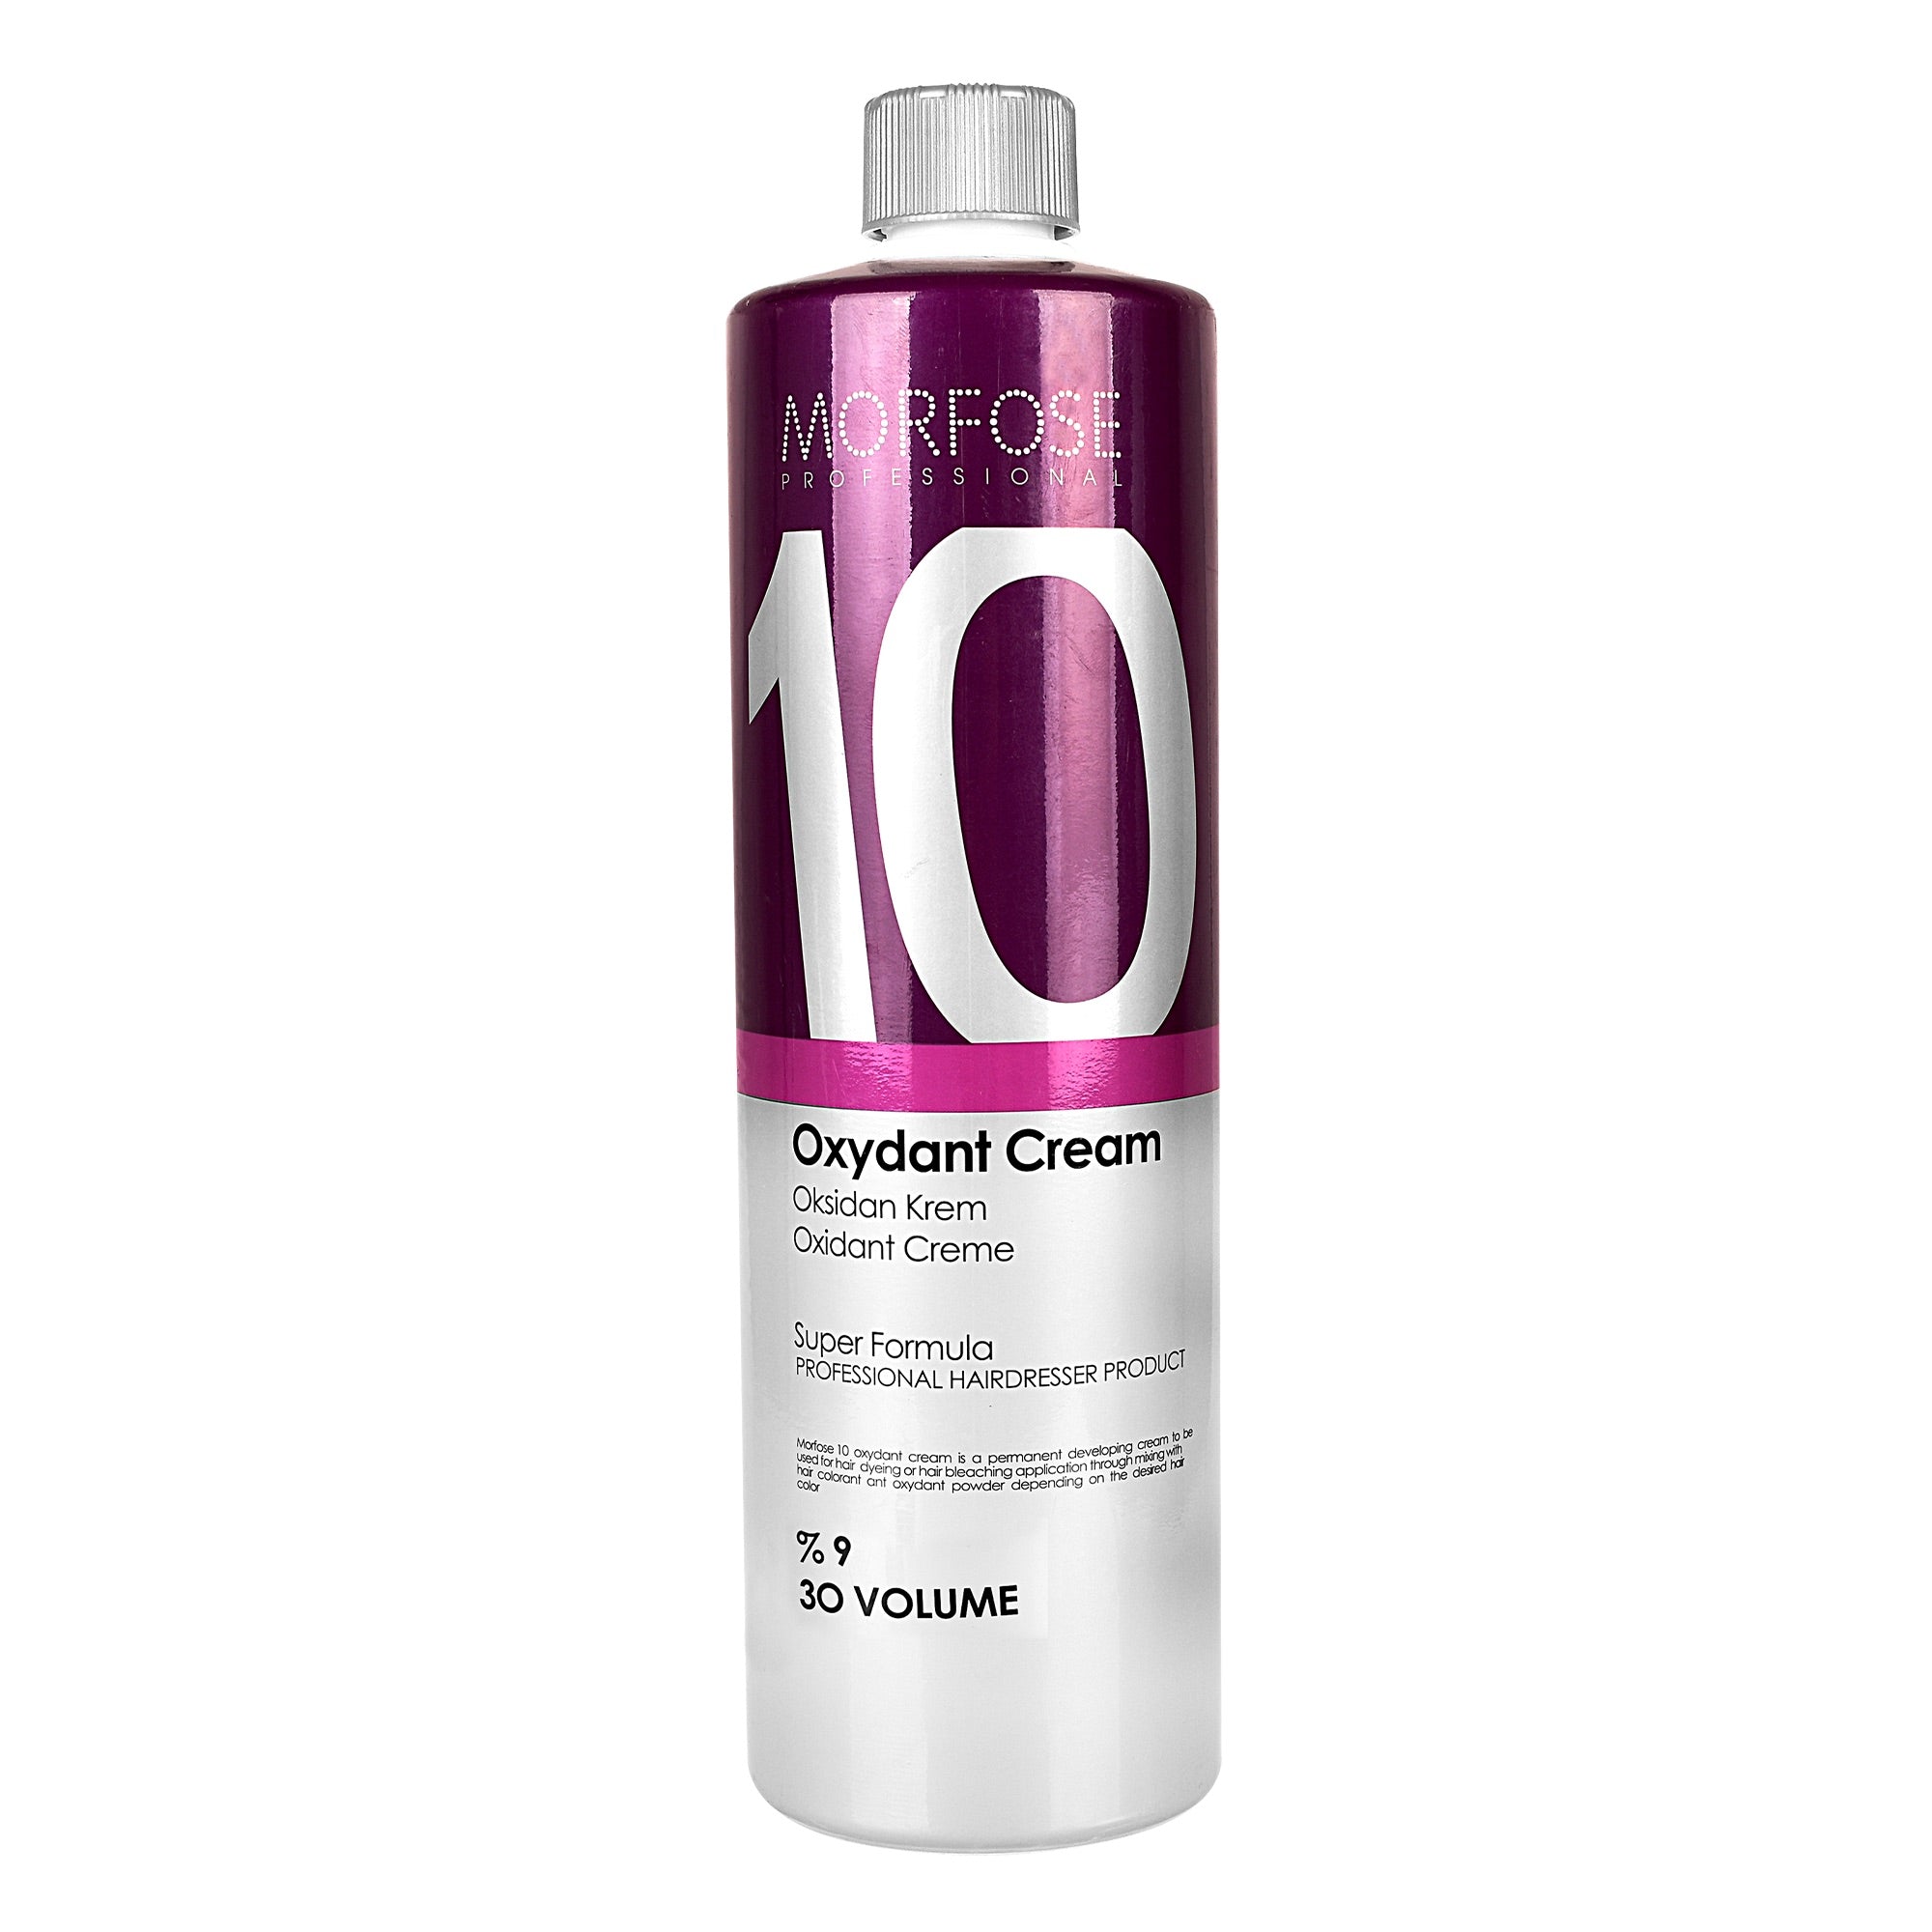 Morfose - 10 Oxidant Cream 30 Volume 1000ml